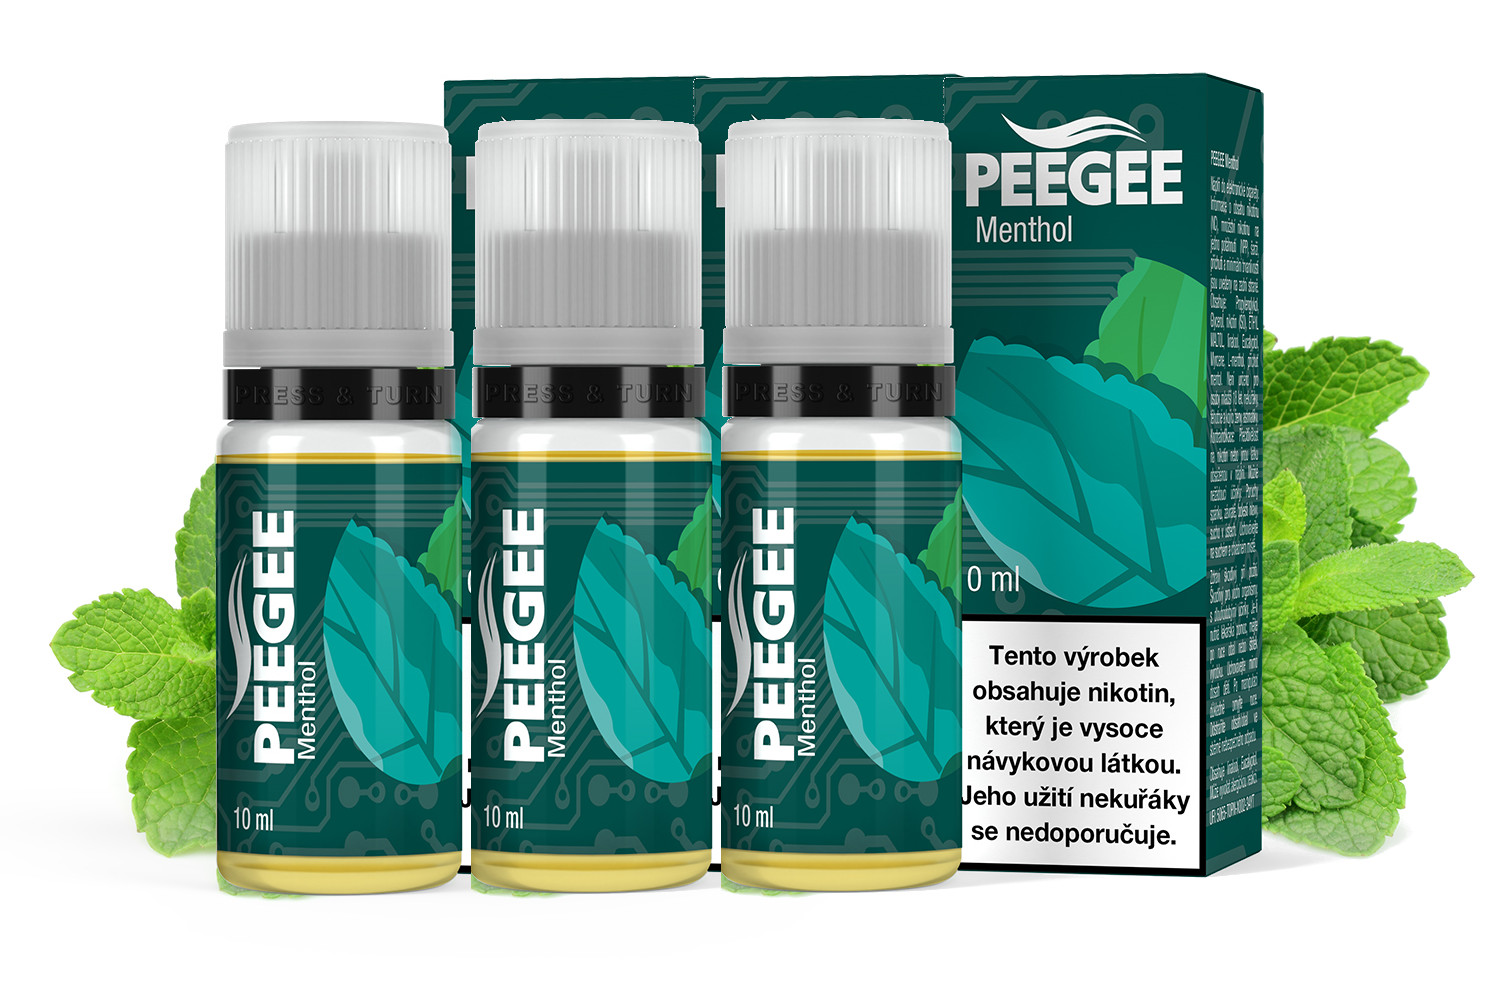 PEEGEE - Mentol (Menthol) 3x10ml Obsah nikotinu: 12mg